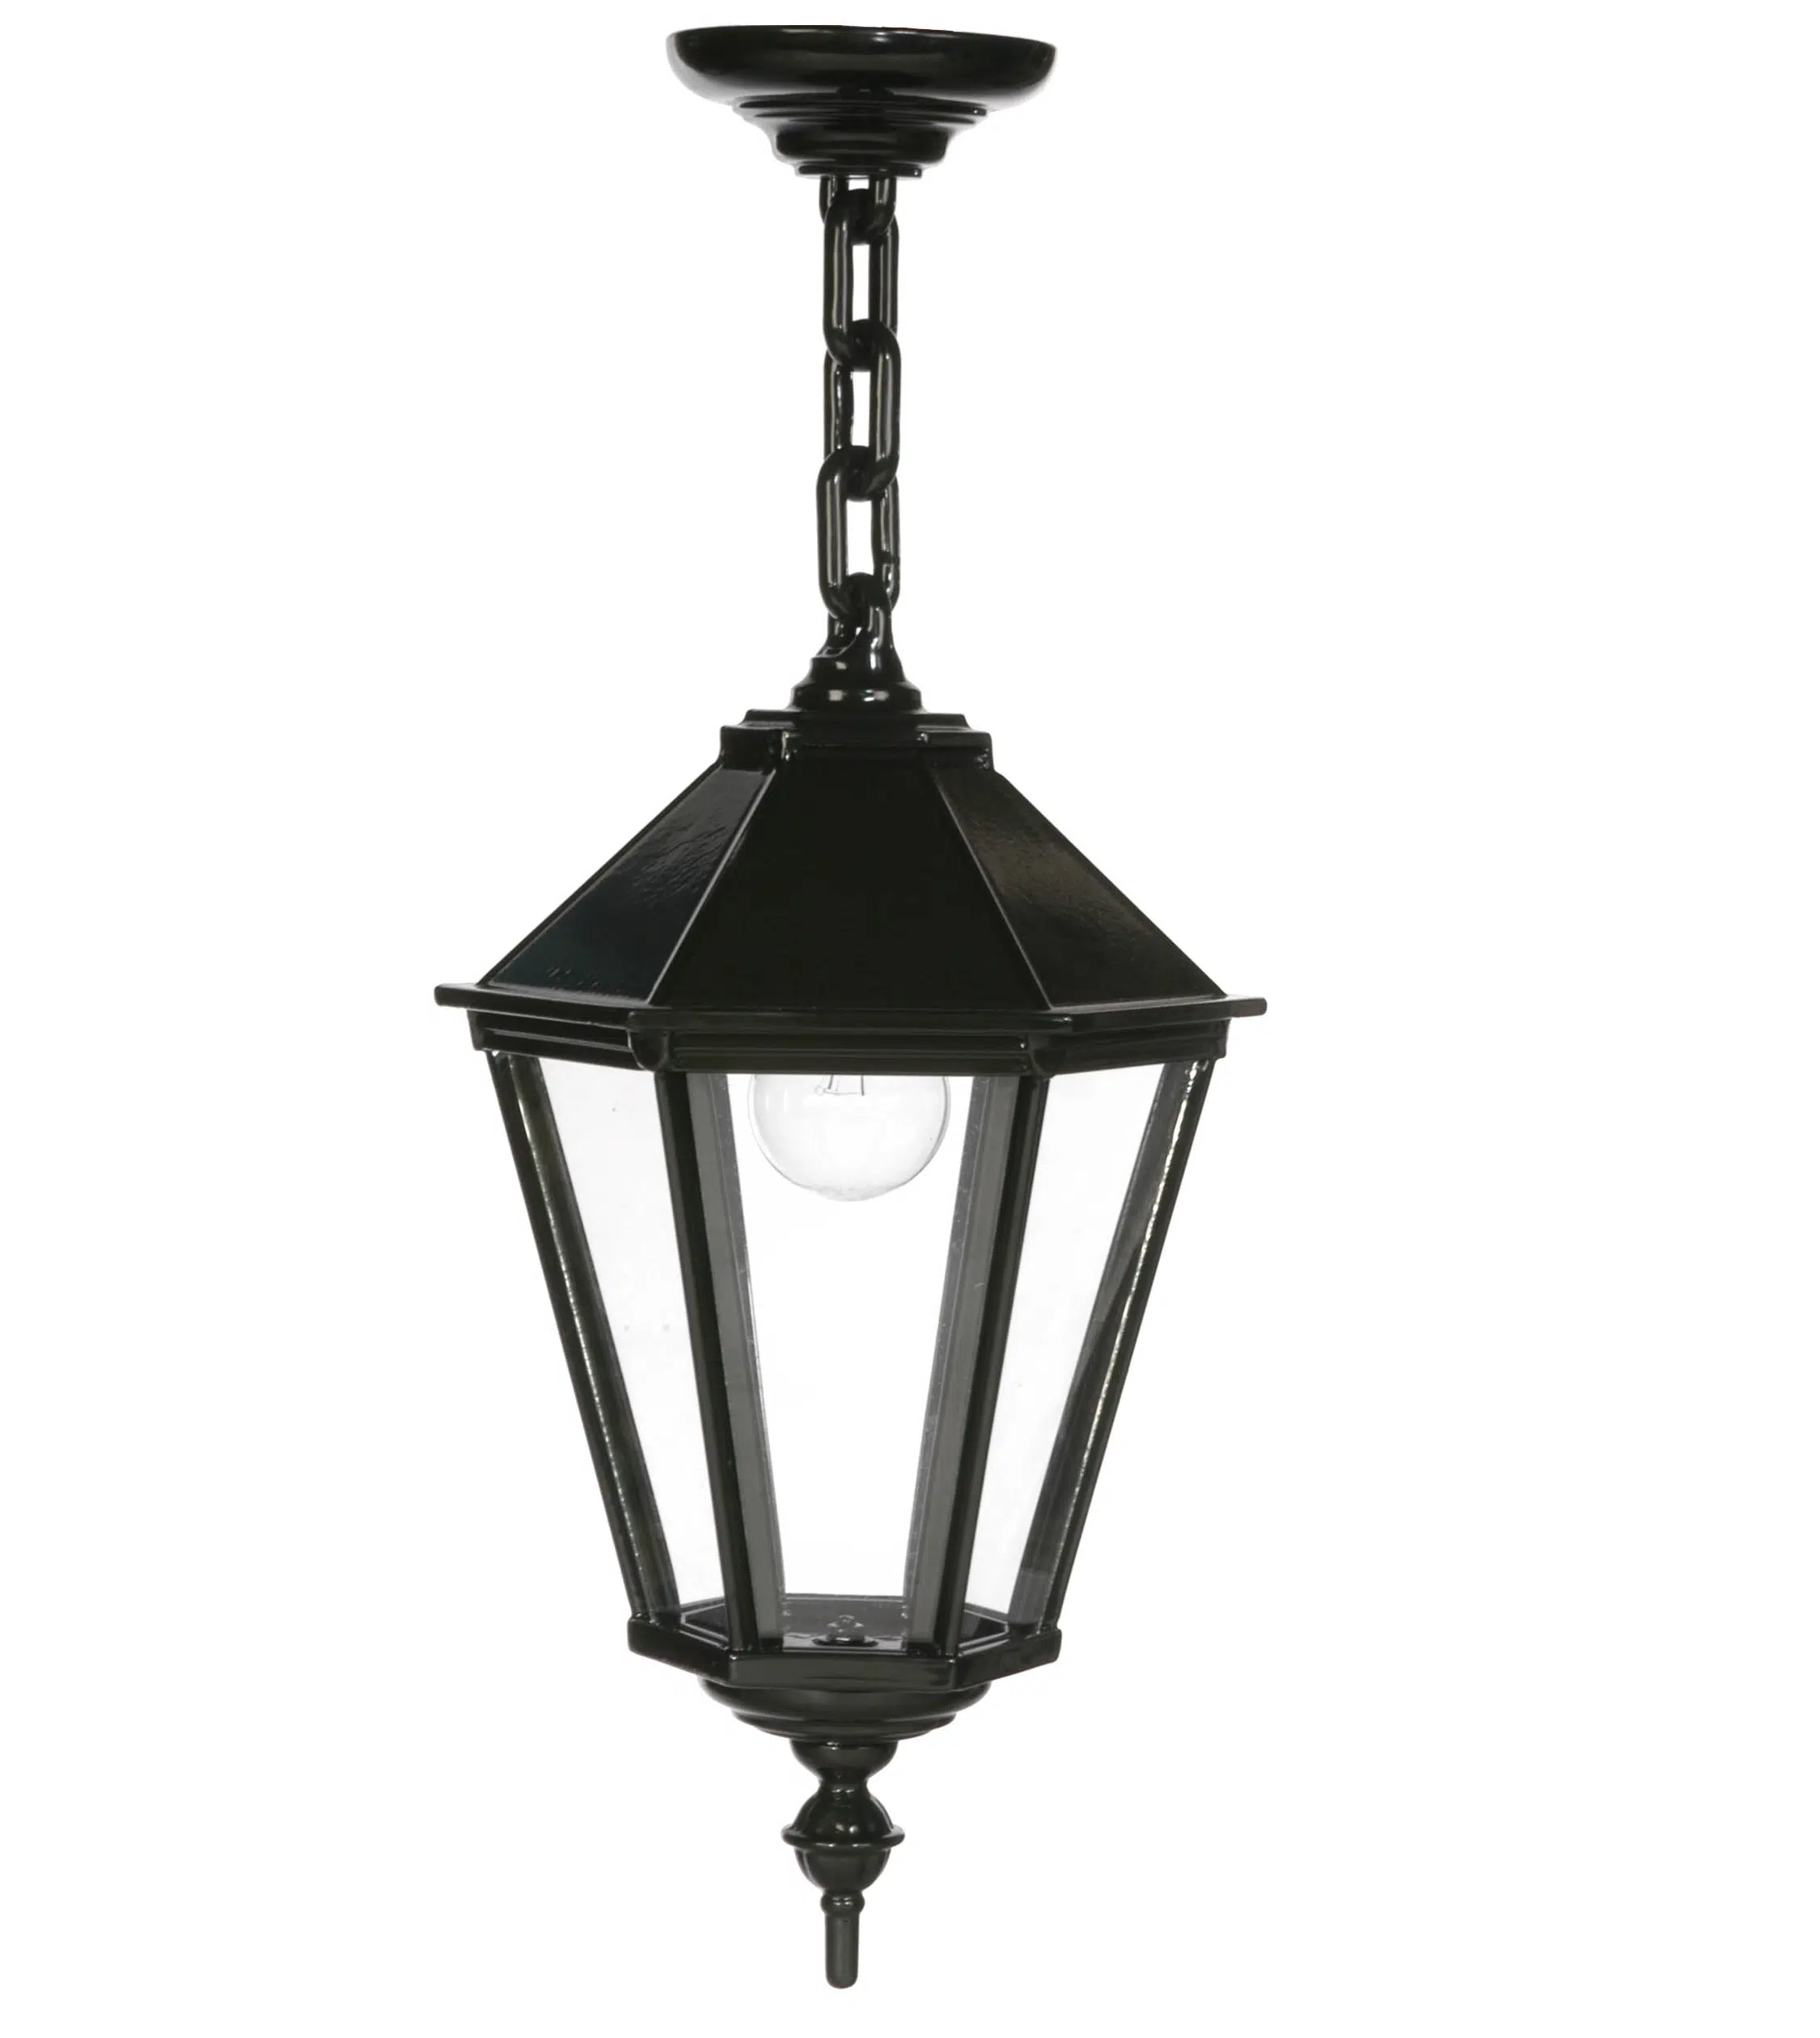 OH568 tuinextra plafondlamp aan ketting zeskant donkergroen